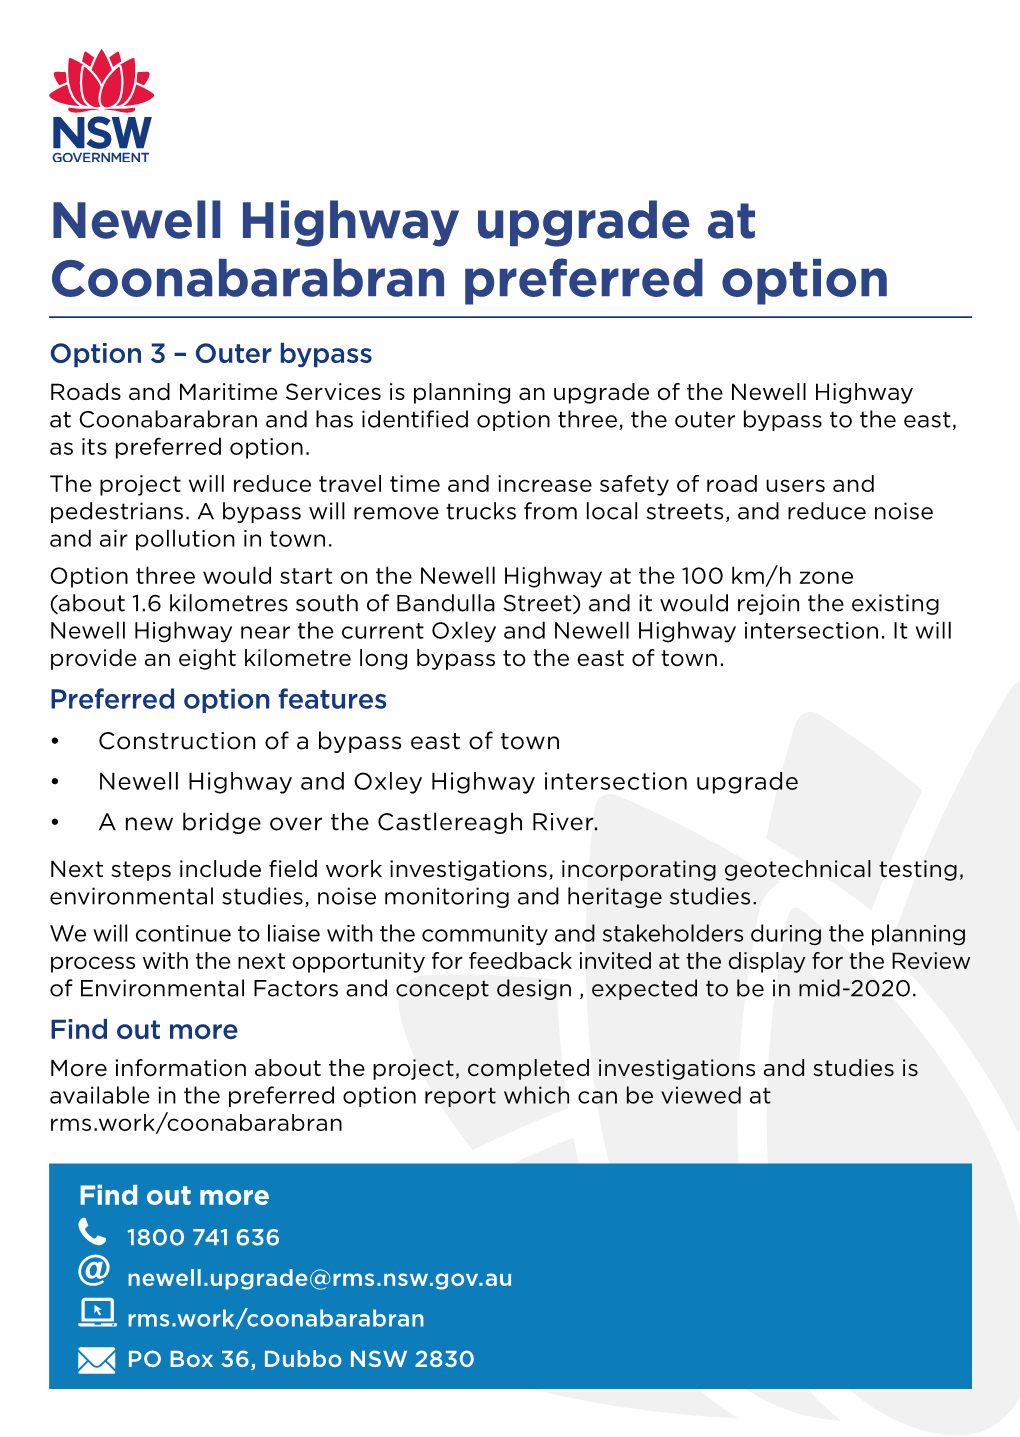 Newell Highway Upgrade at Coonabarabran Preferred Option